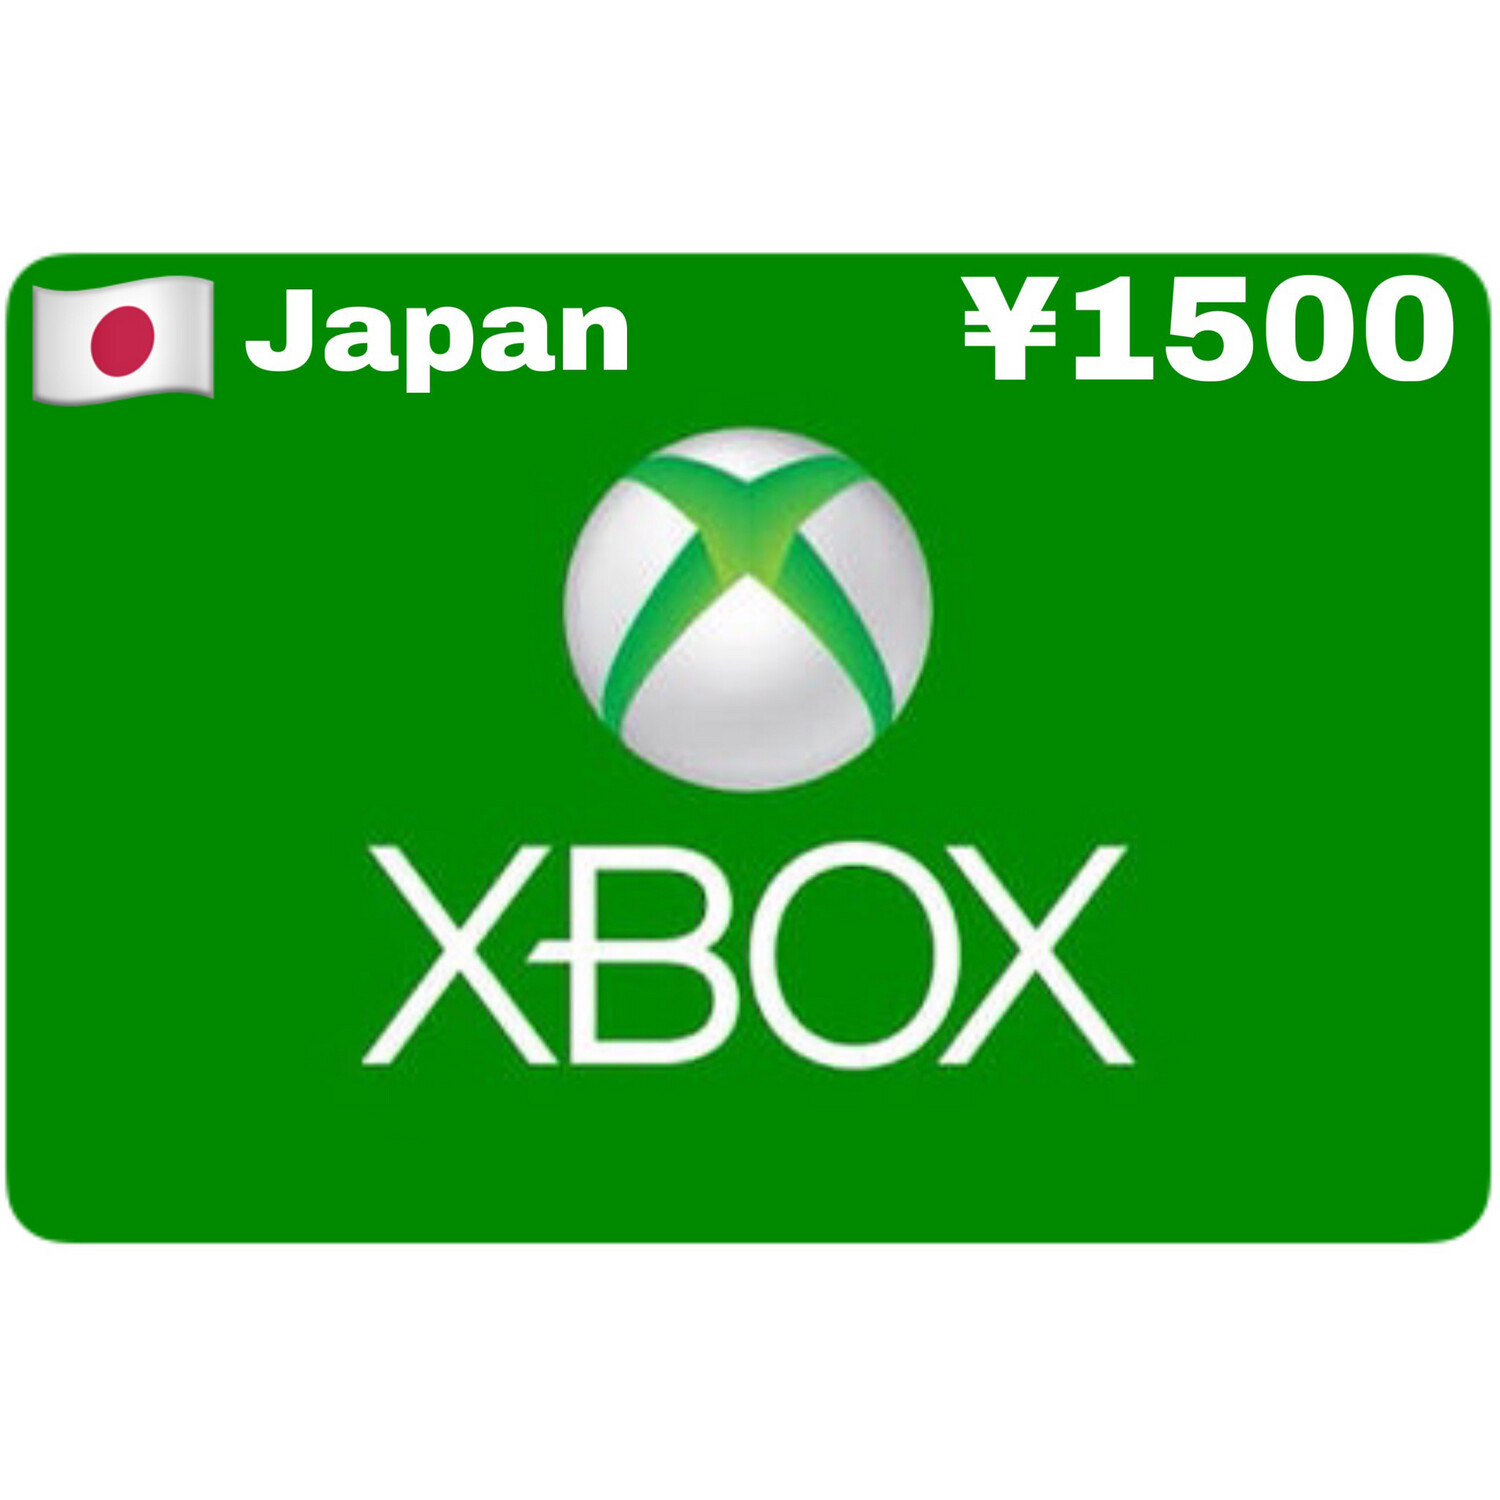 Xbox Gift Card Japan ¥1500 Yen